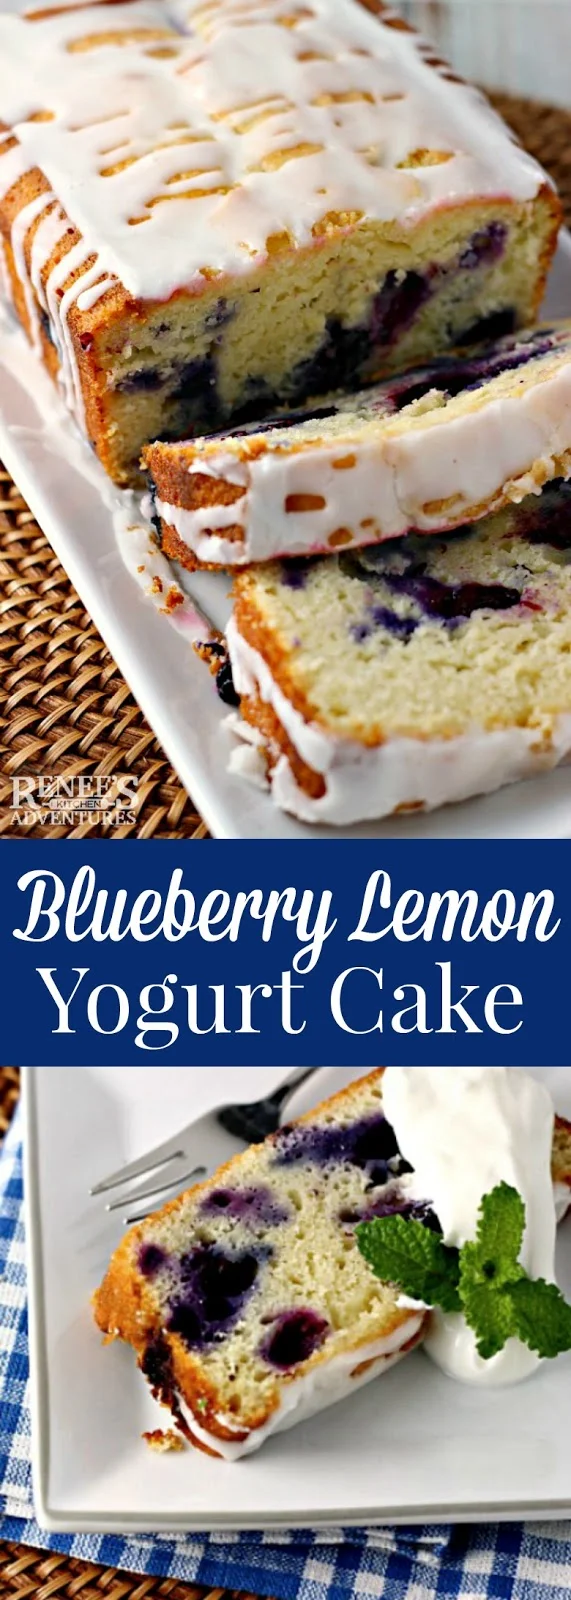 Blueberry Lemon Yogurt Cake | Renee's Kitchen Adventures